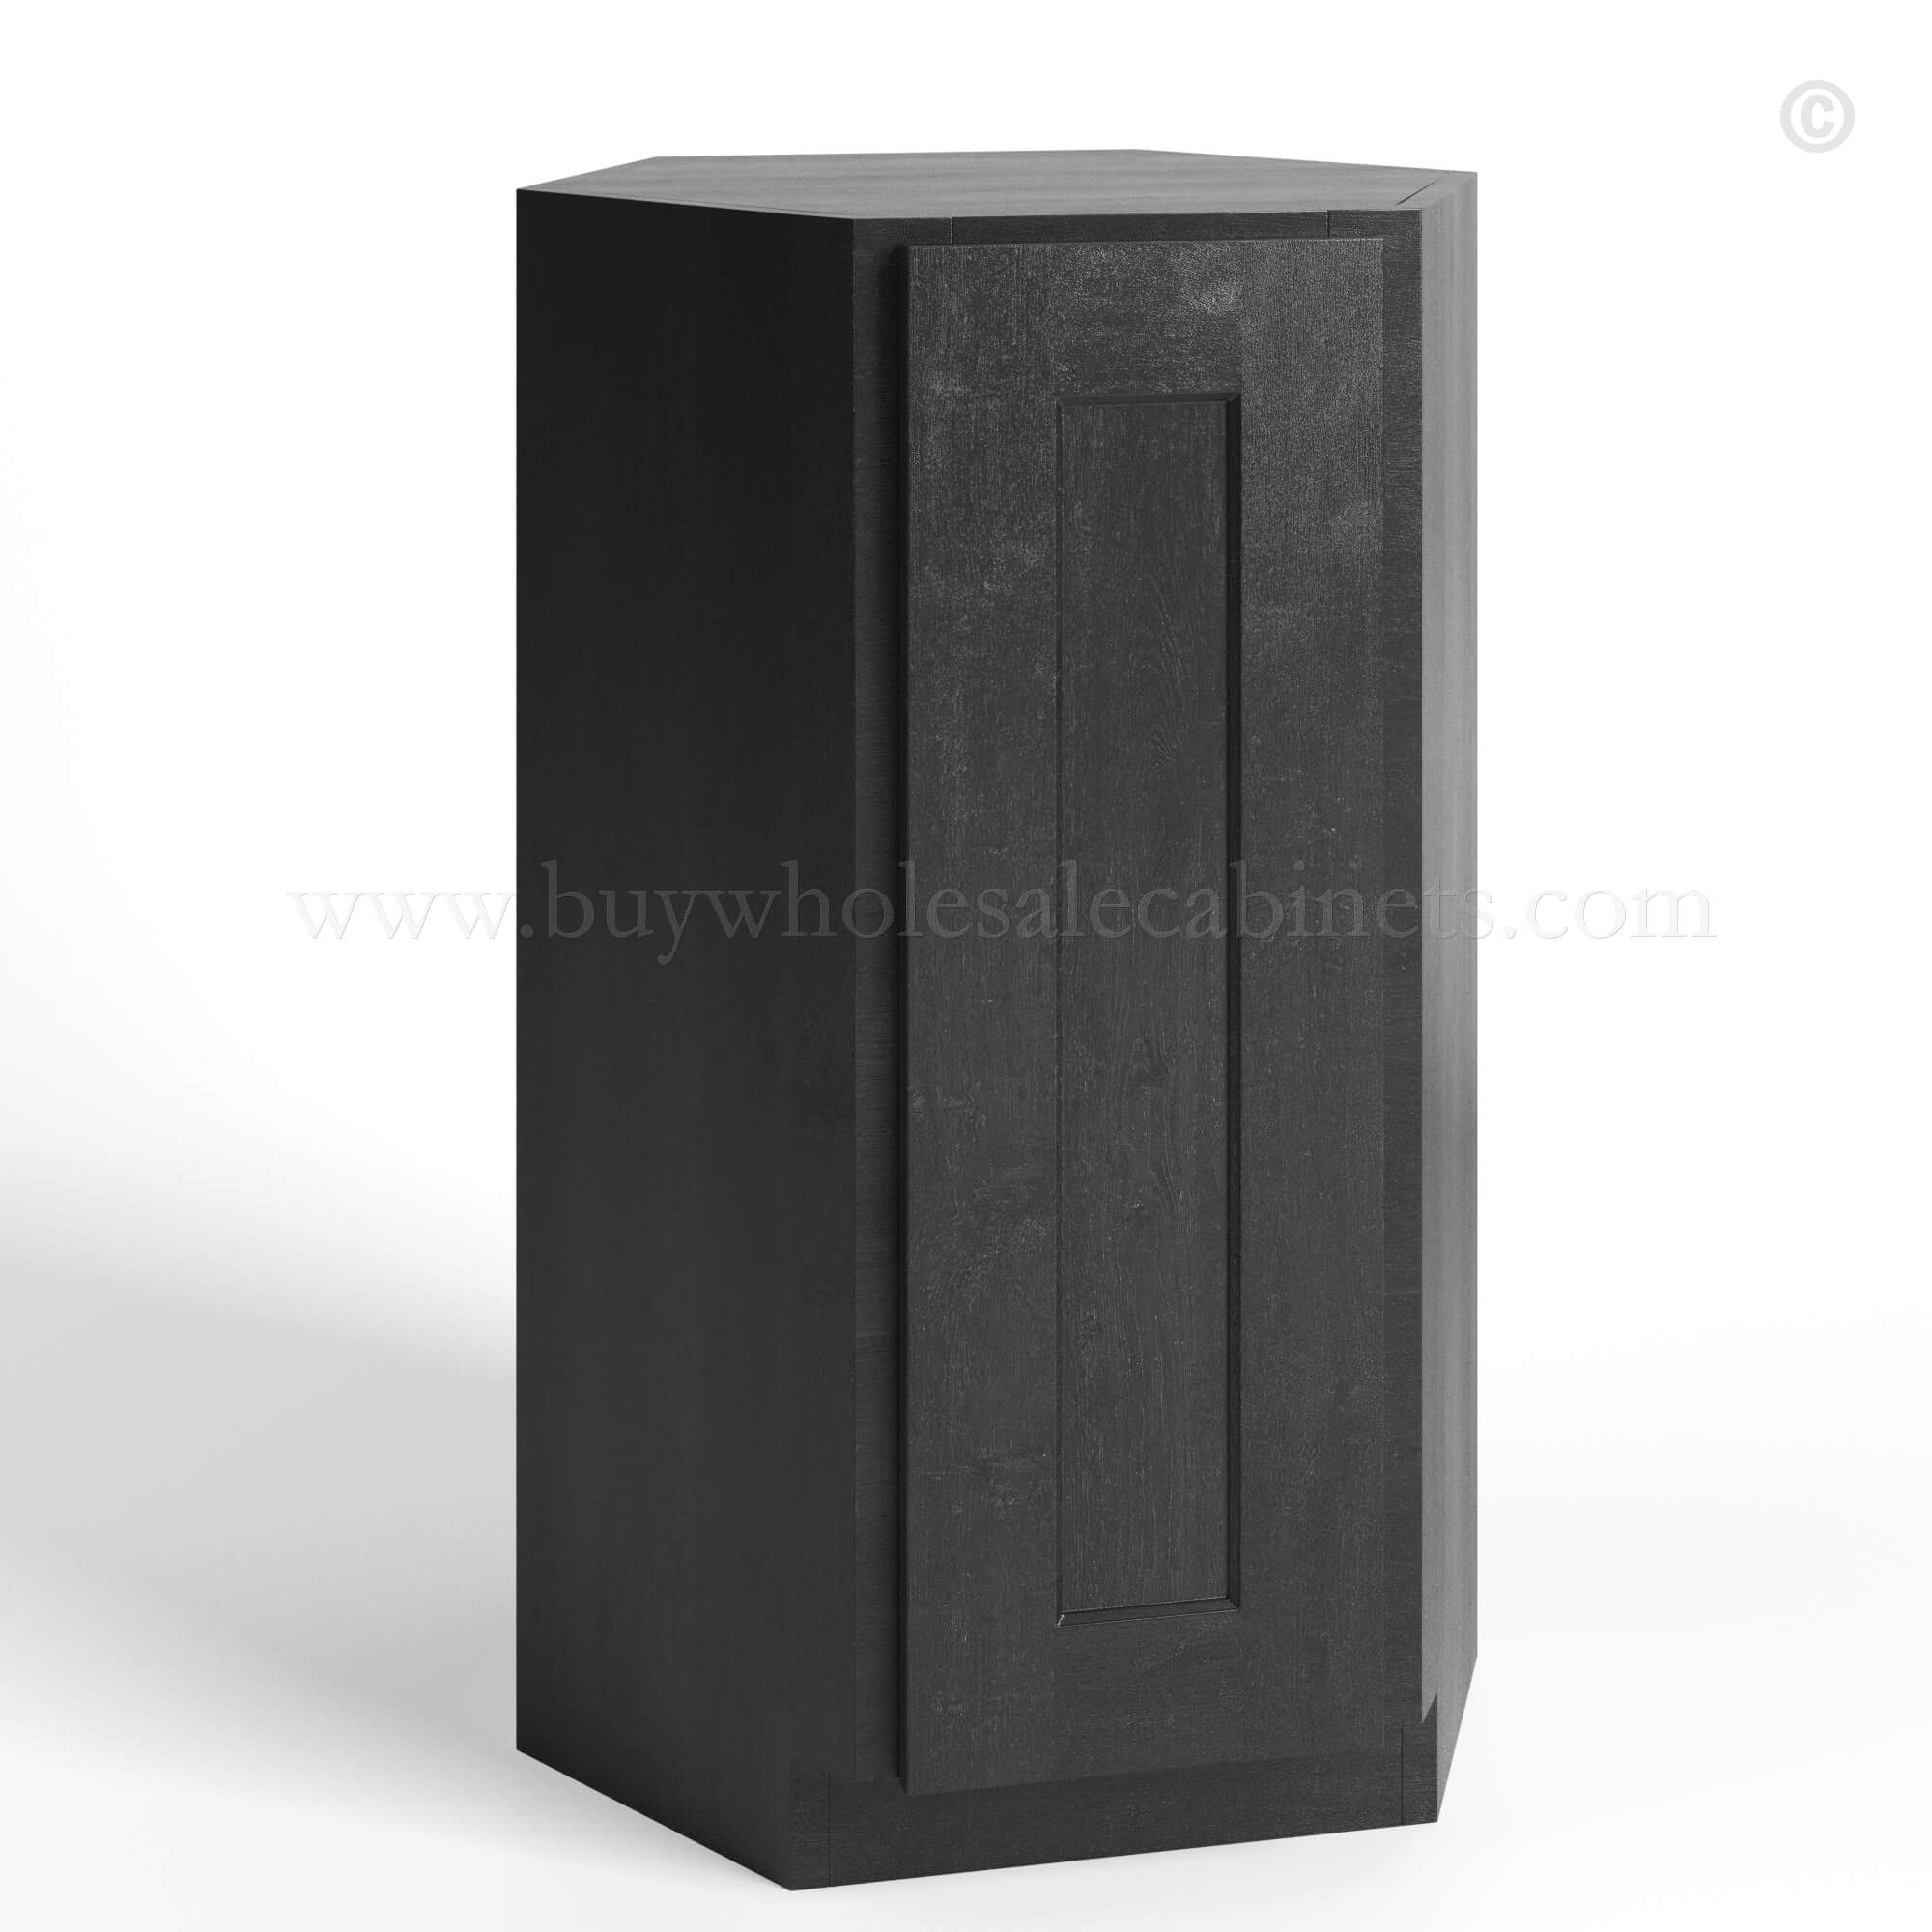 Charcoal Black Shaker Wall Diagonal Corner, rta cabinets, wholesale cabinets